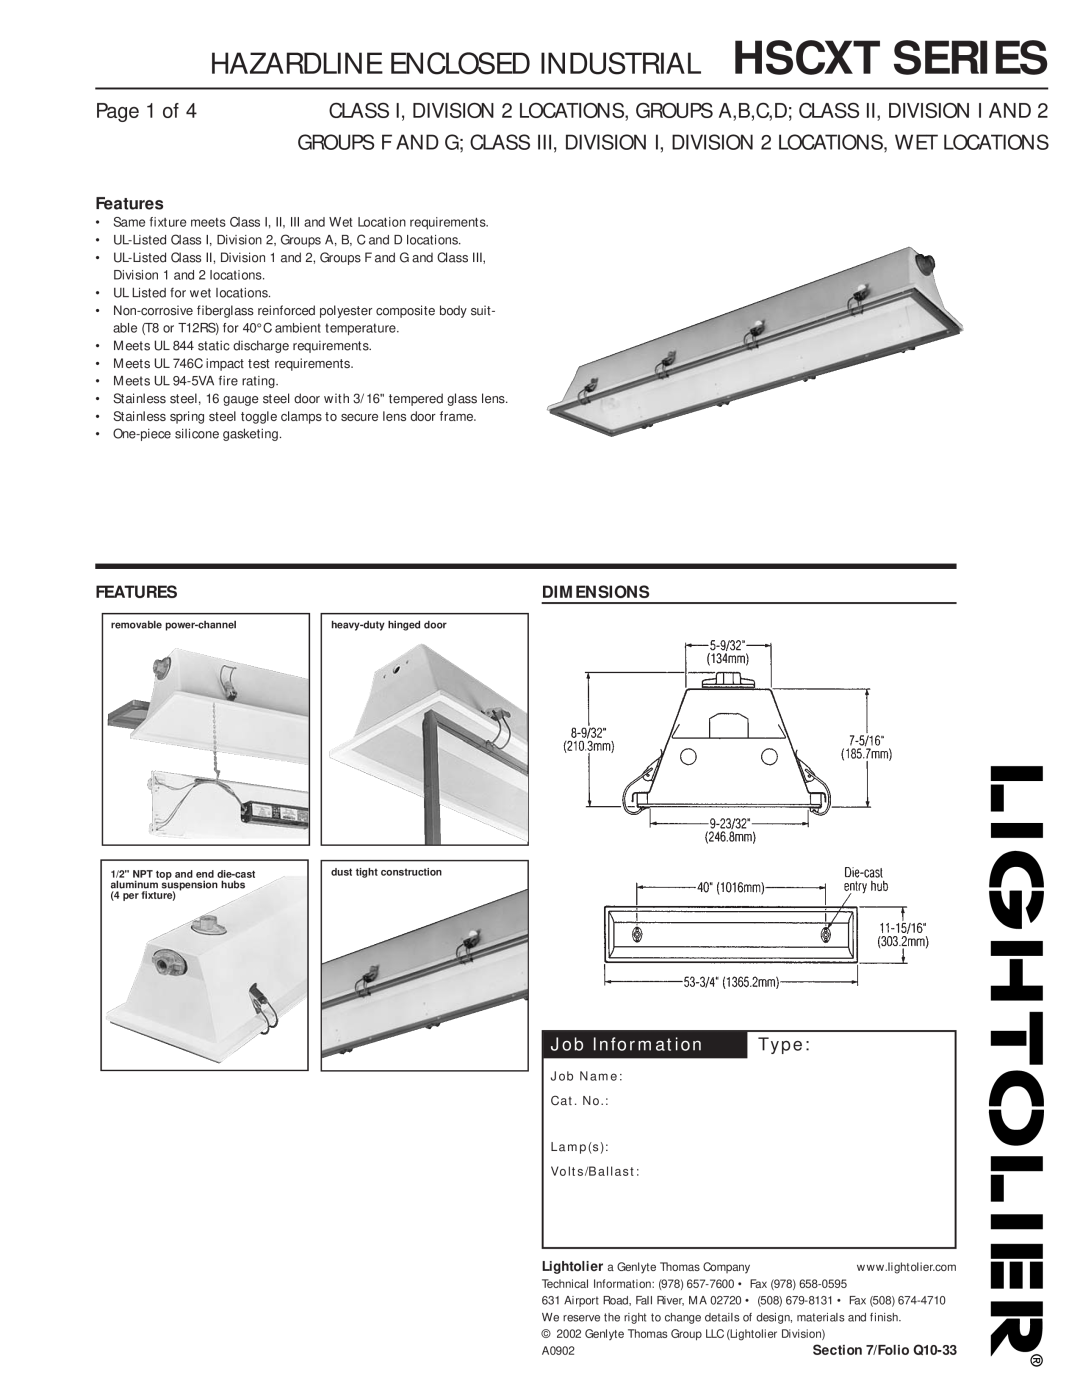 Lightolier HSCXT Series dimensions Features, Dimensions, Job Information Type, Hazardline Enclosed Industrial Hscxt Series 